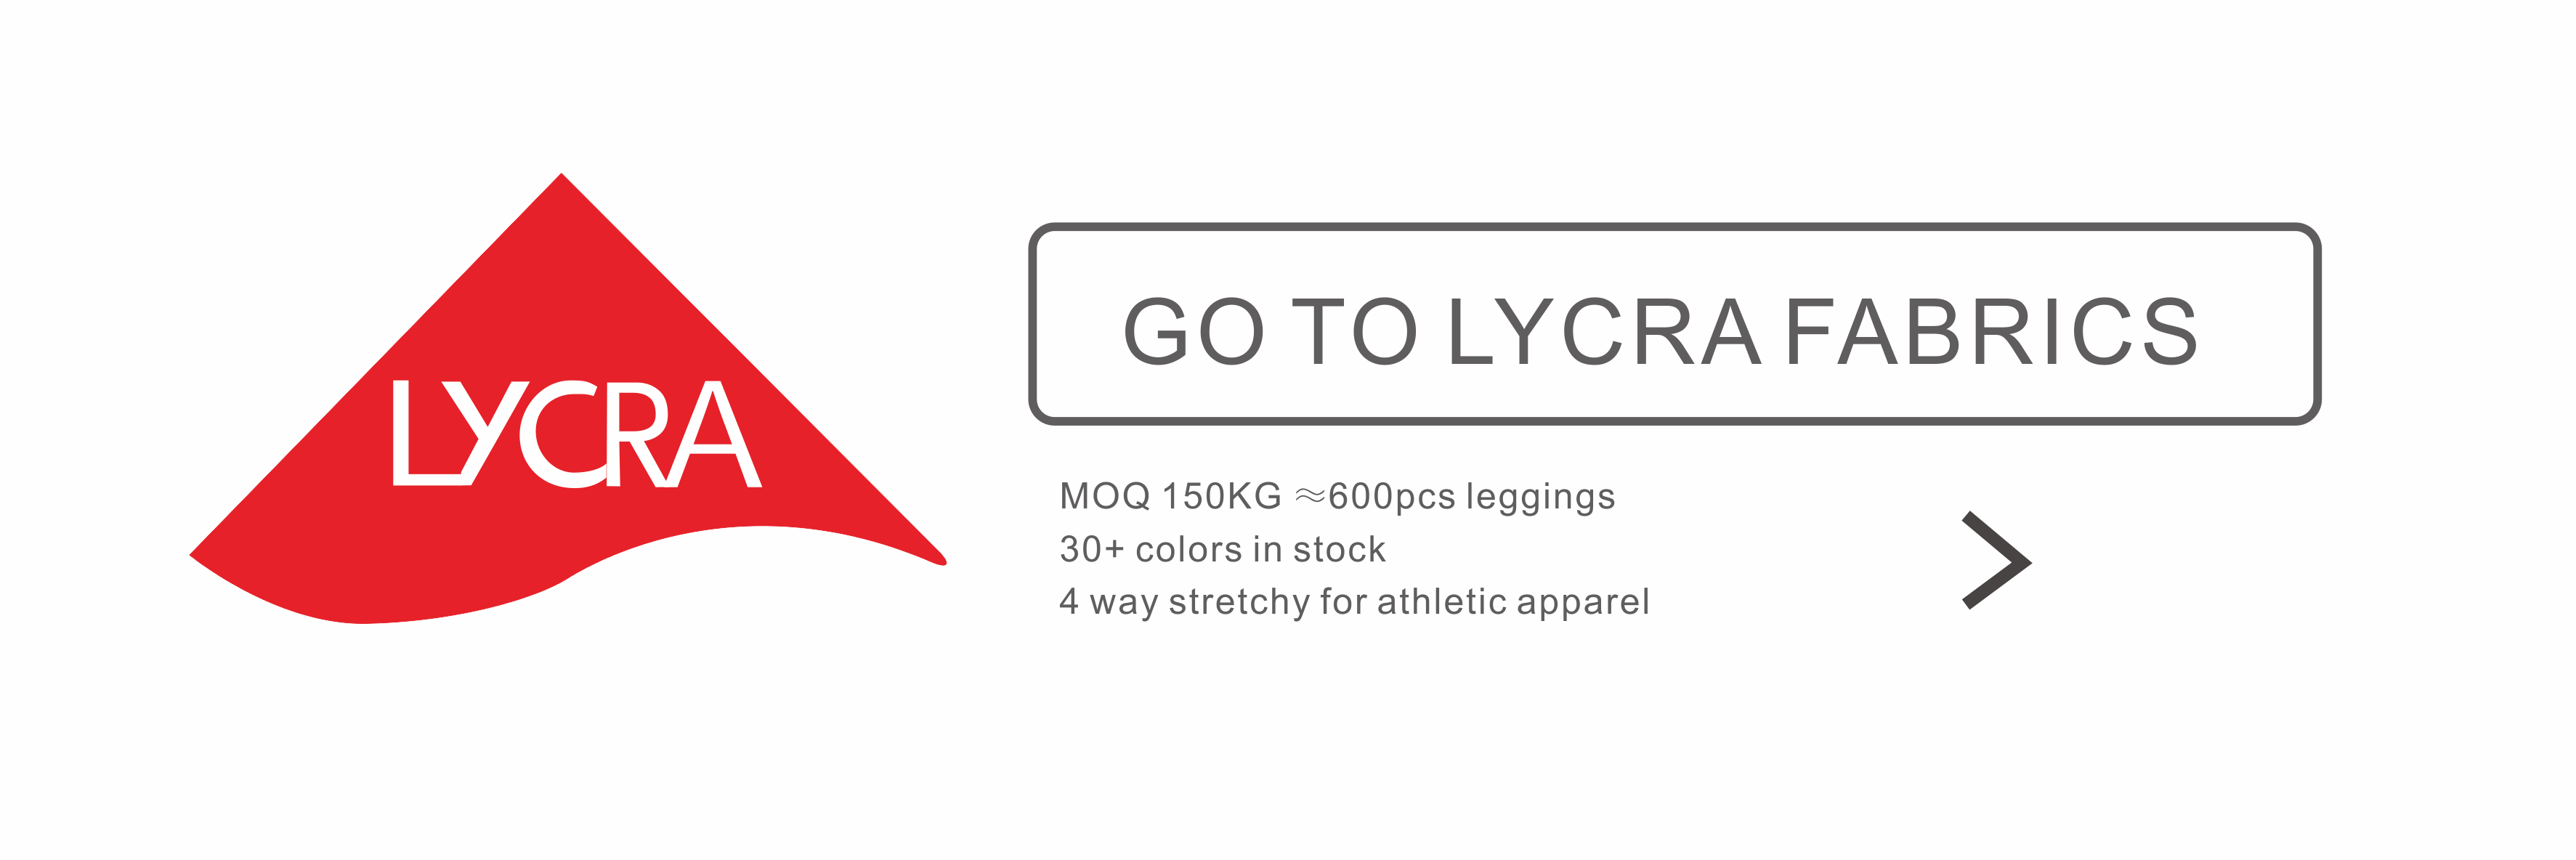 go to lycra 4 way stretchy fabrics